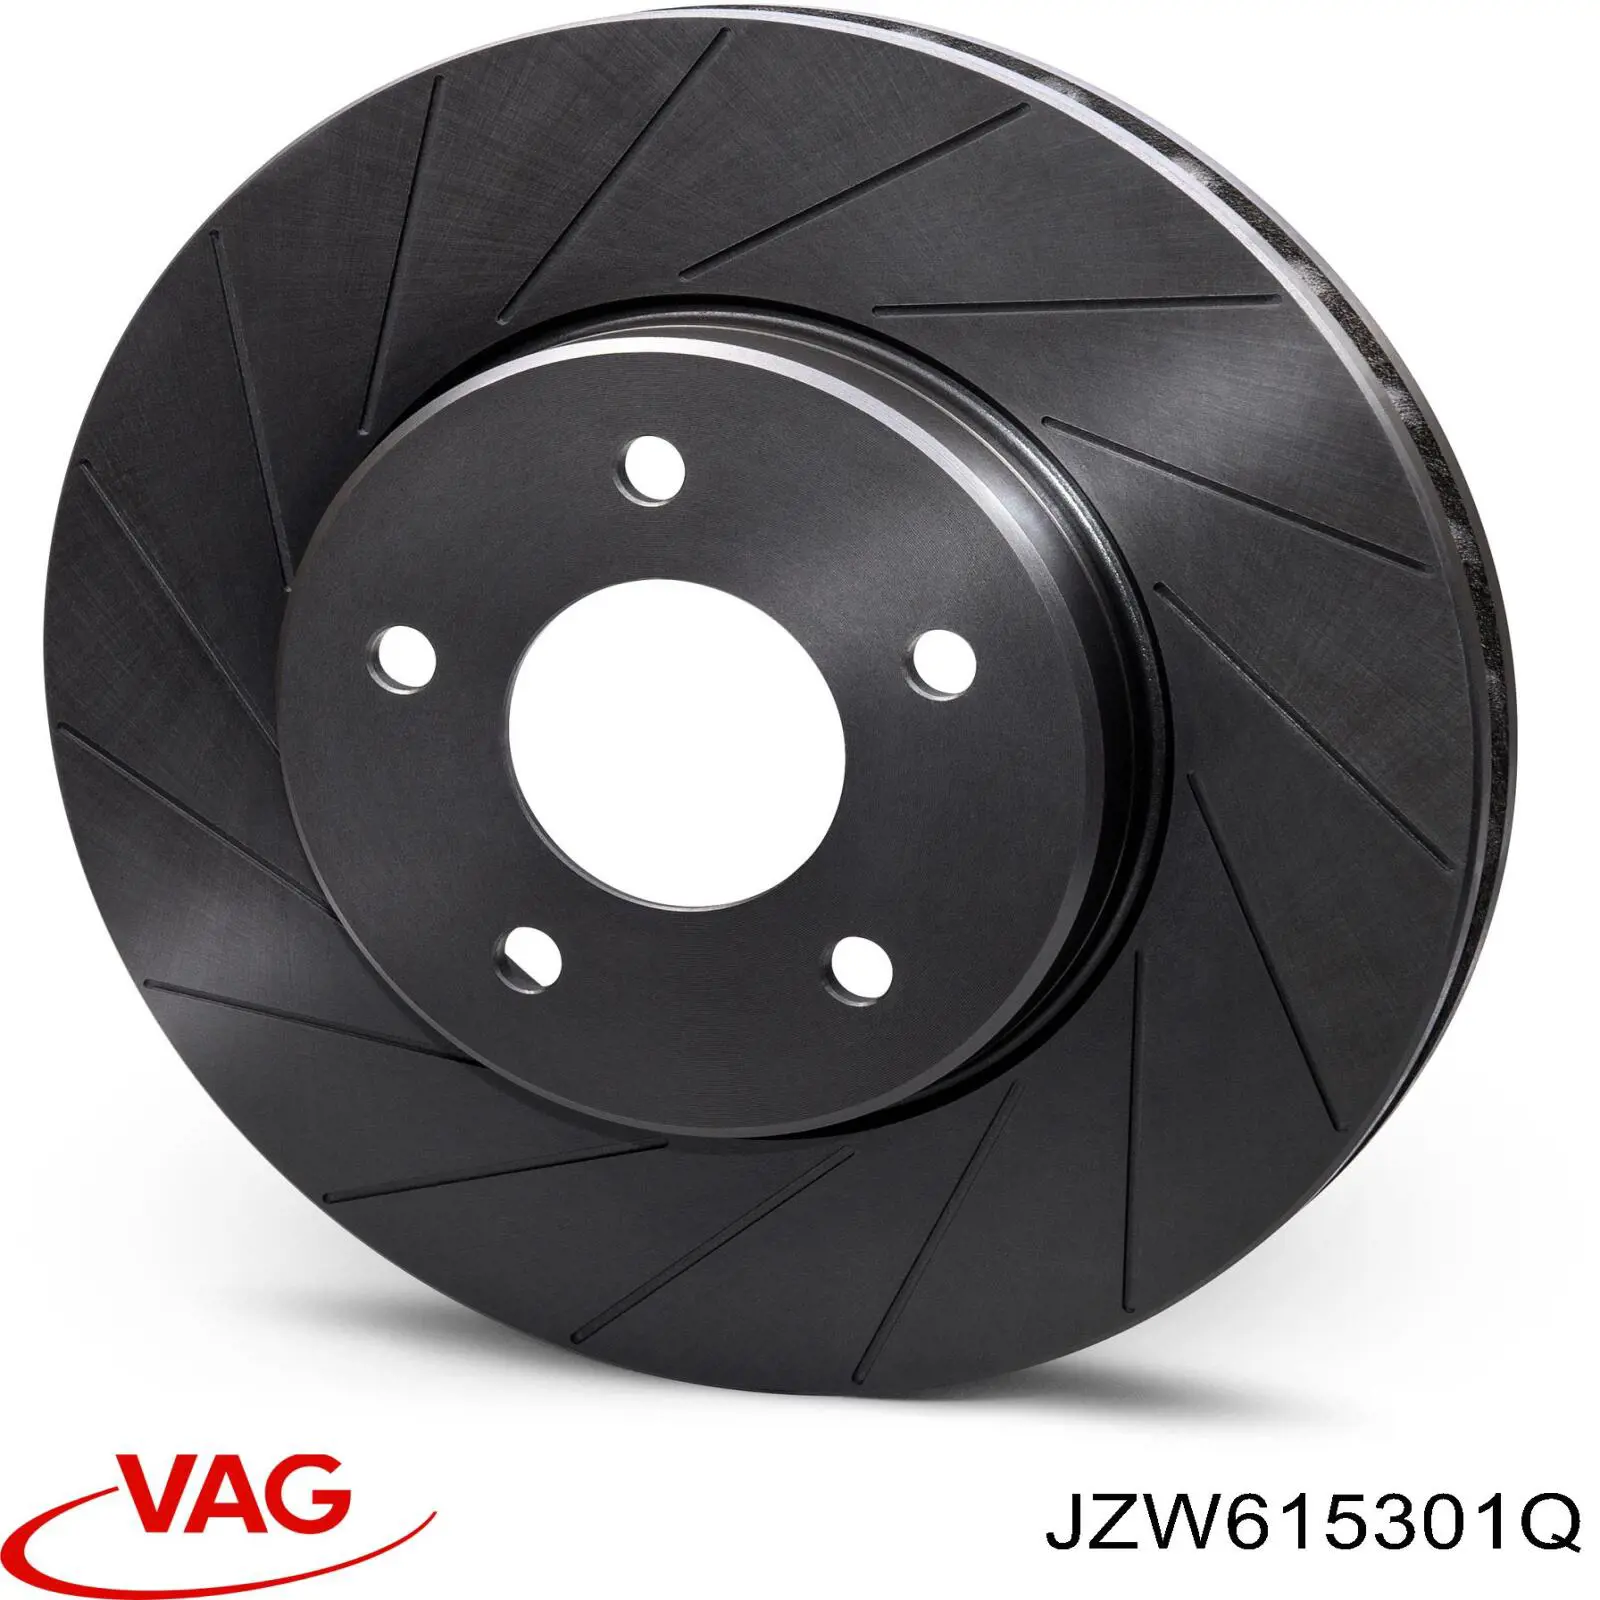 JZW615301Q VAG disco de freno delantero